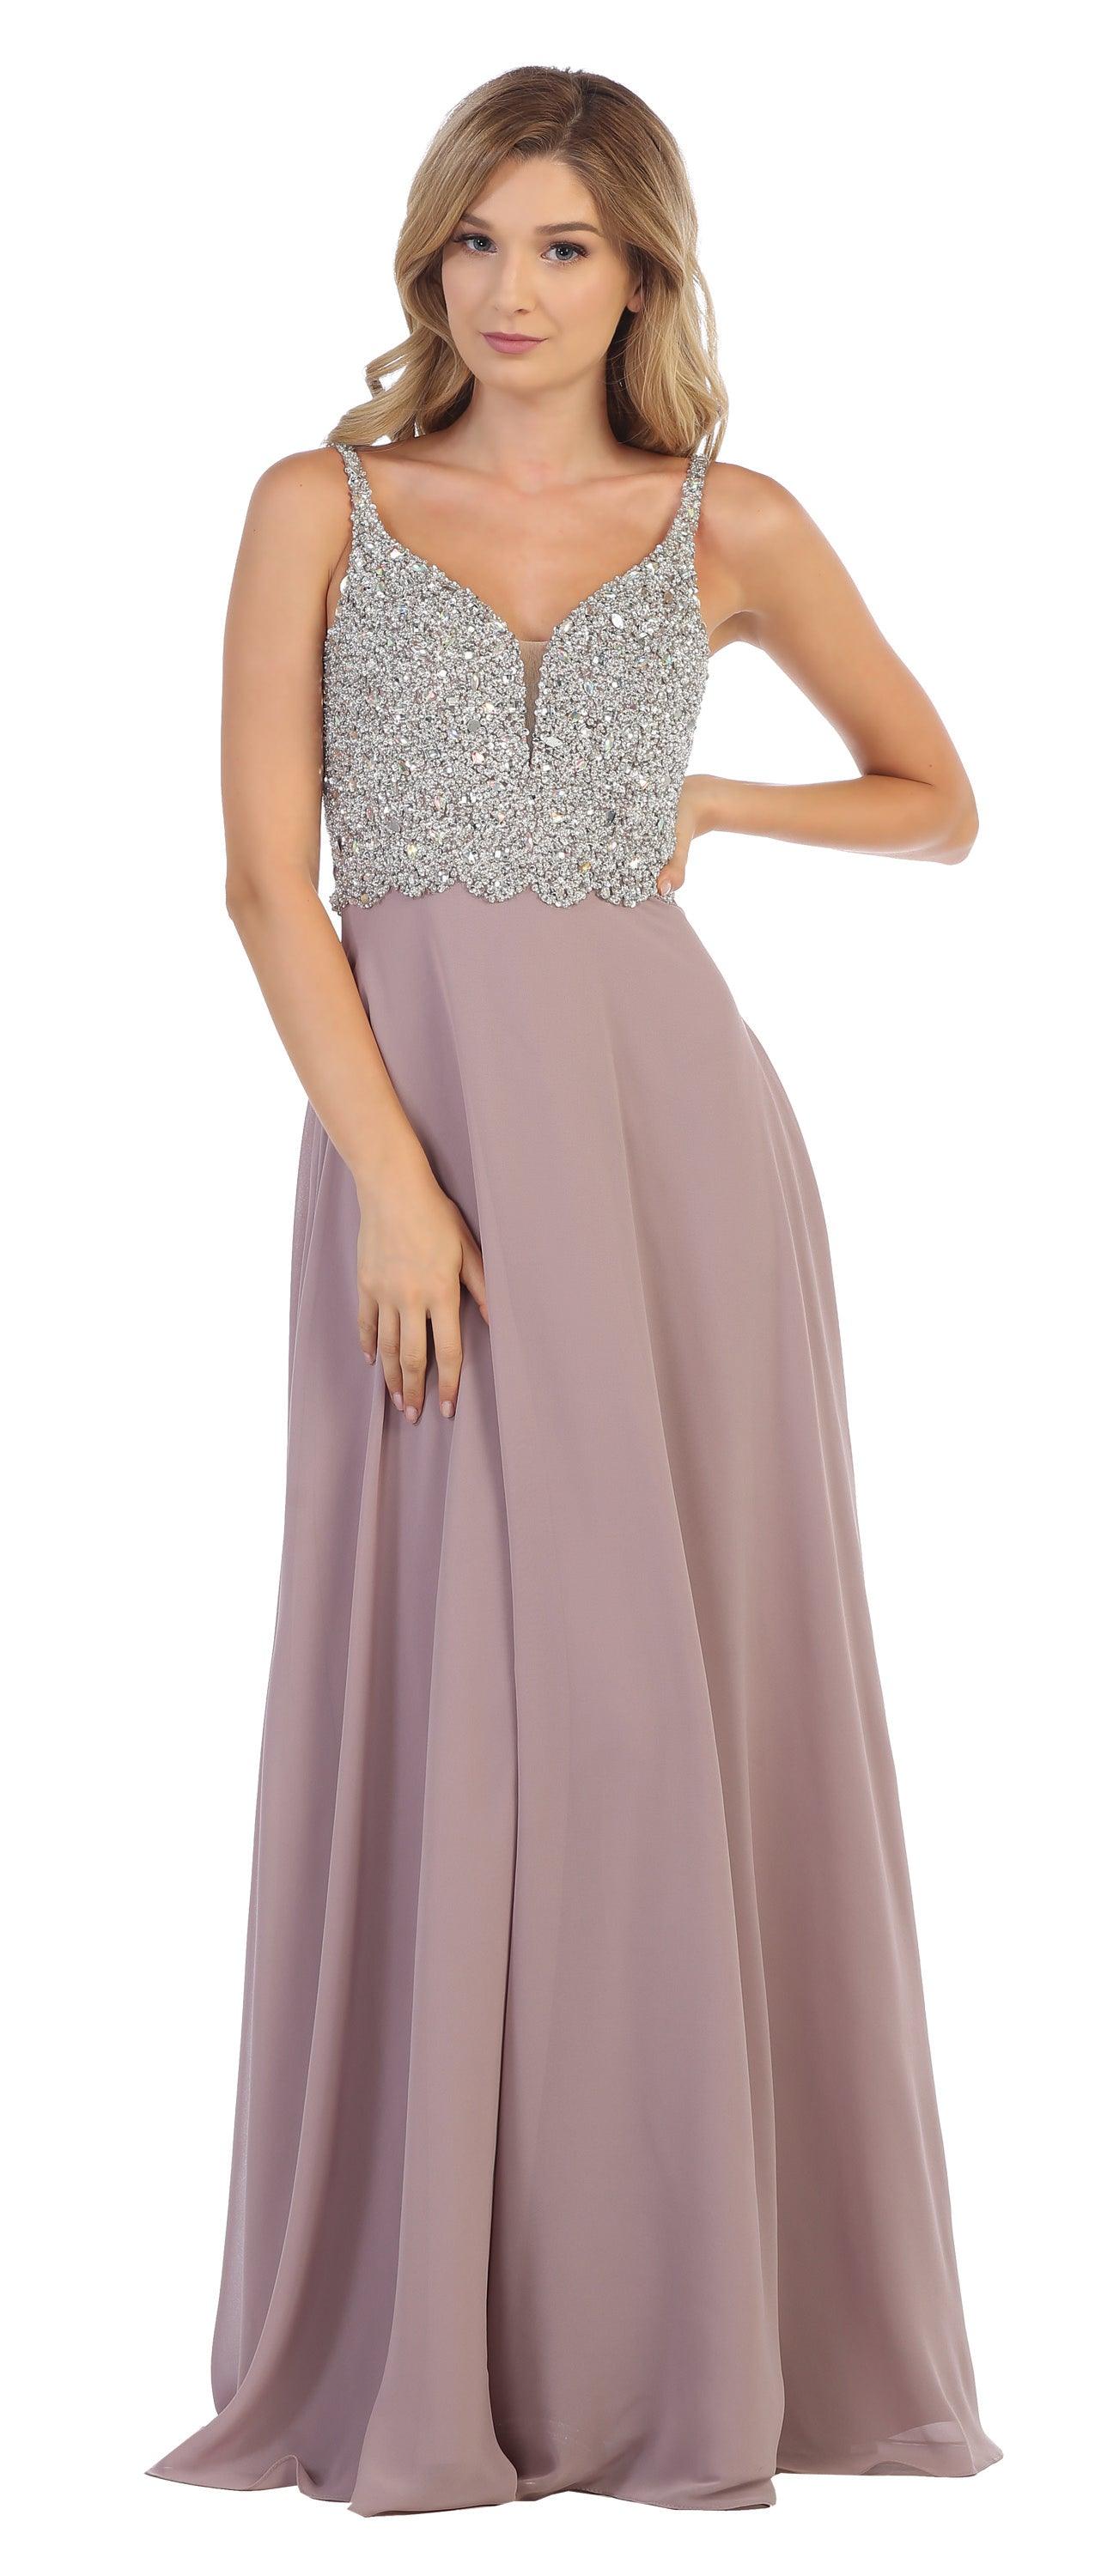 Long Sleeveless Formal Chiffon Dress - The Dress Outlet